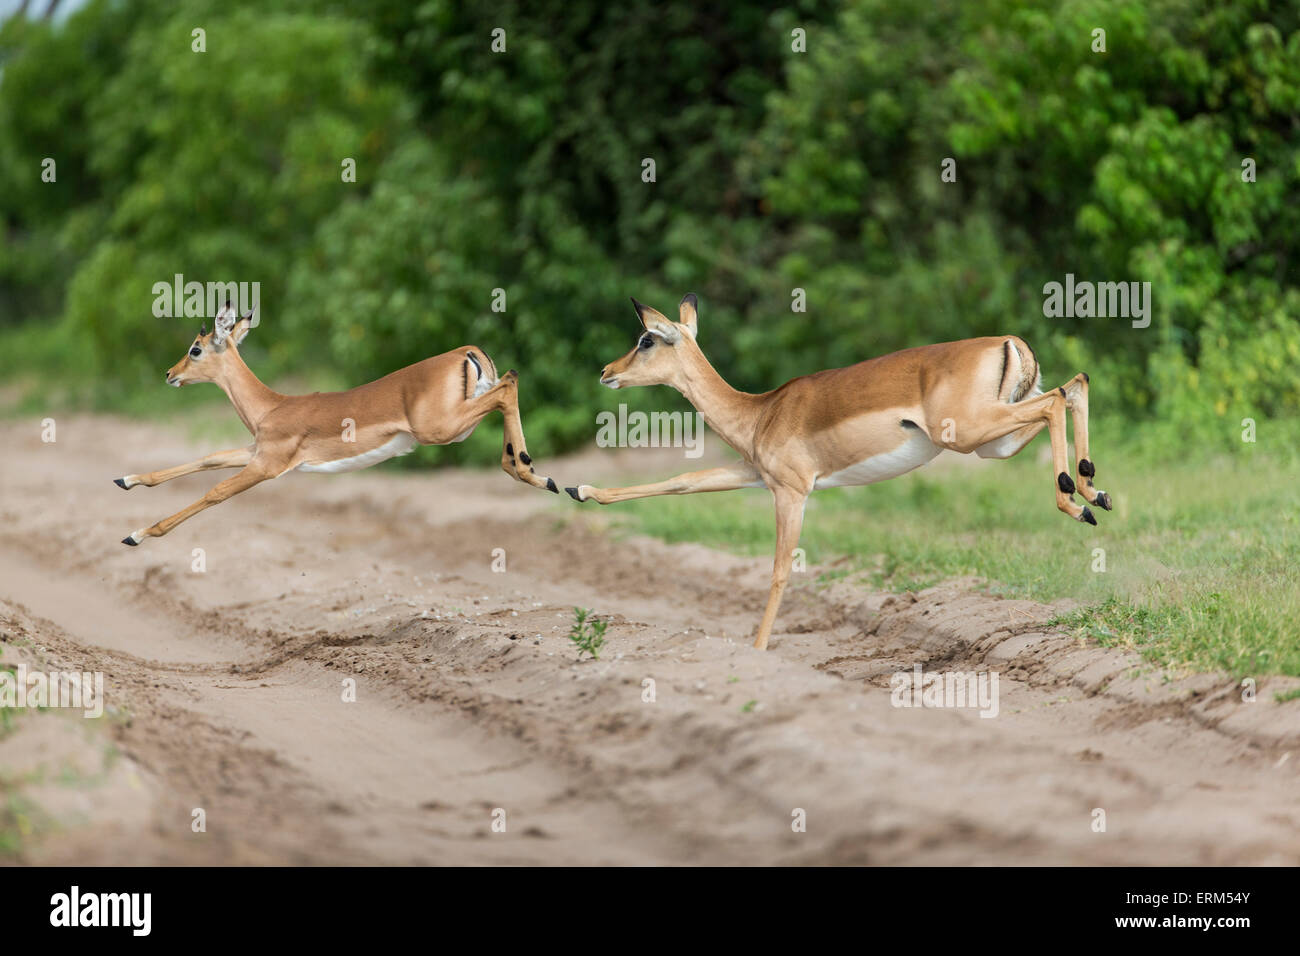 Afrika, Botswana, Chobe National Park, Impala (Aepyceros Melampus) springen über Safari zu verfolgen, in der Nähe von Chobe Fluss Okavango Delt Stockfoto